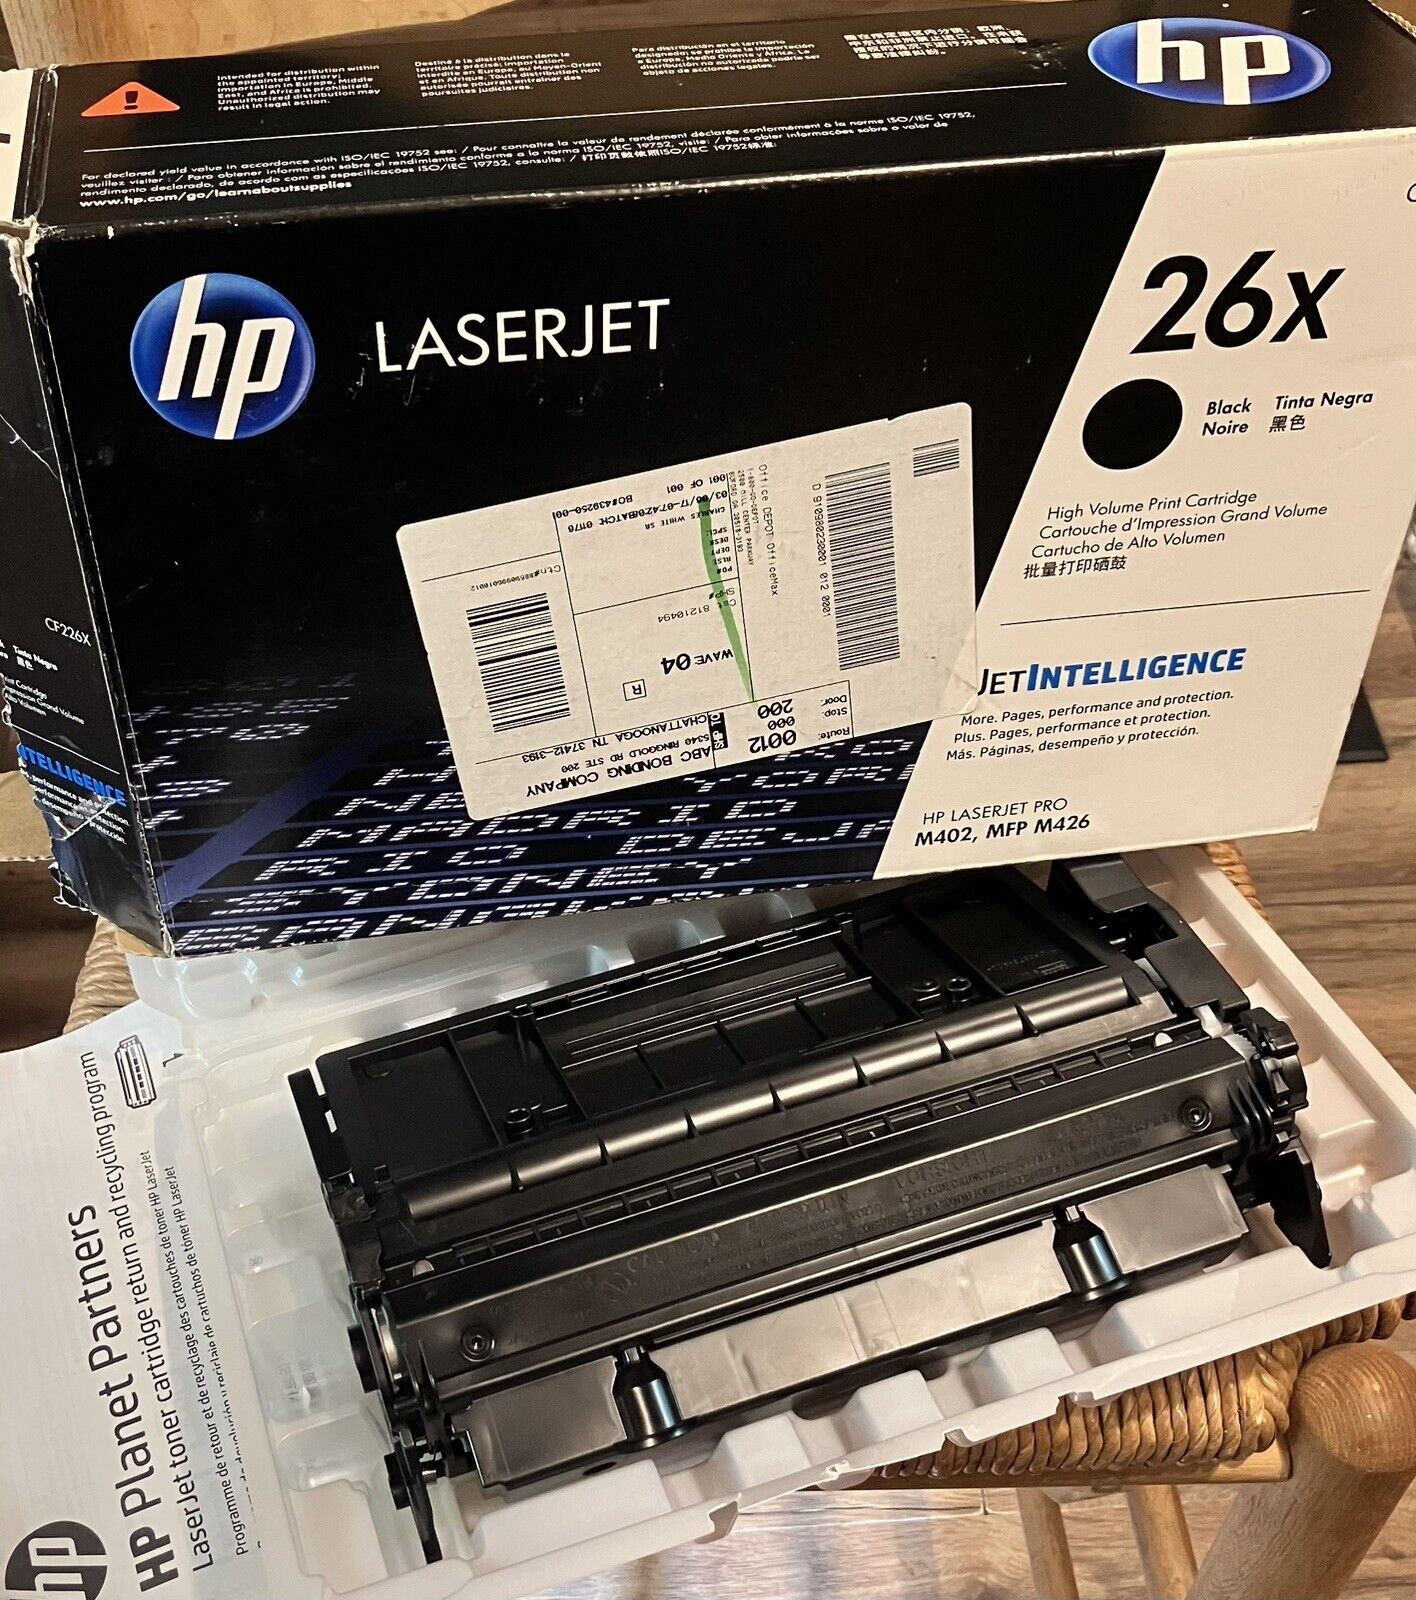 New Open Box HP Laserjet 26x Black High Volume Print Cartridge